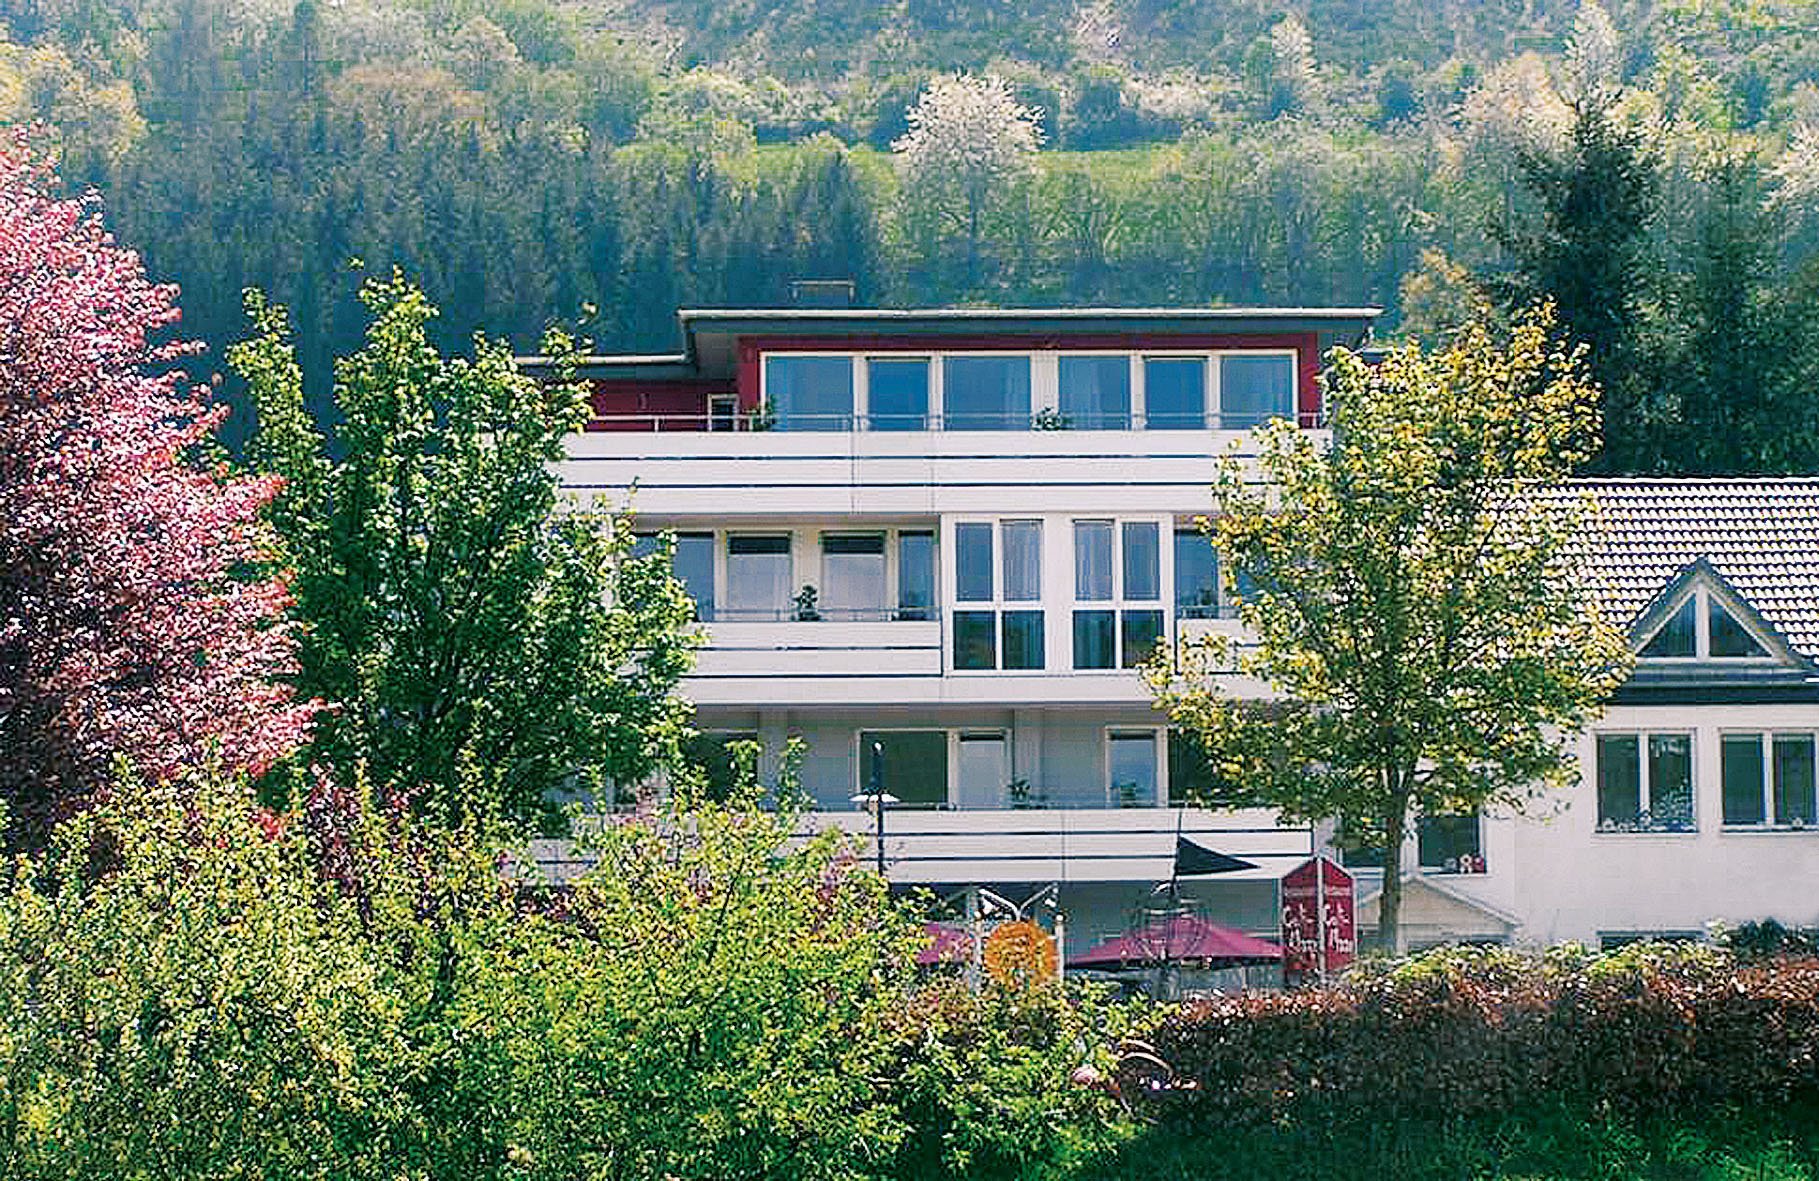 4 Tage Wandertage Eifel – Landhotel Maarium (3.5 Sterne) in Meerfeld, Rheinland-Pfalz inkl. Frühstück